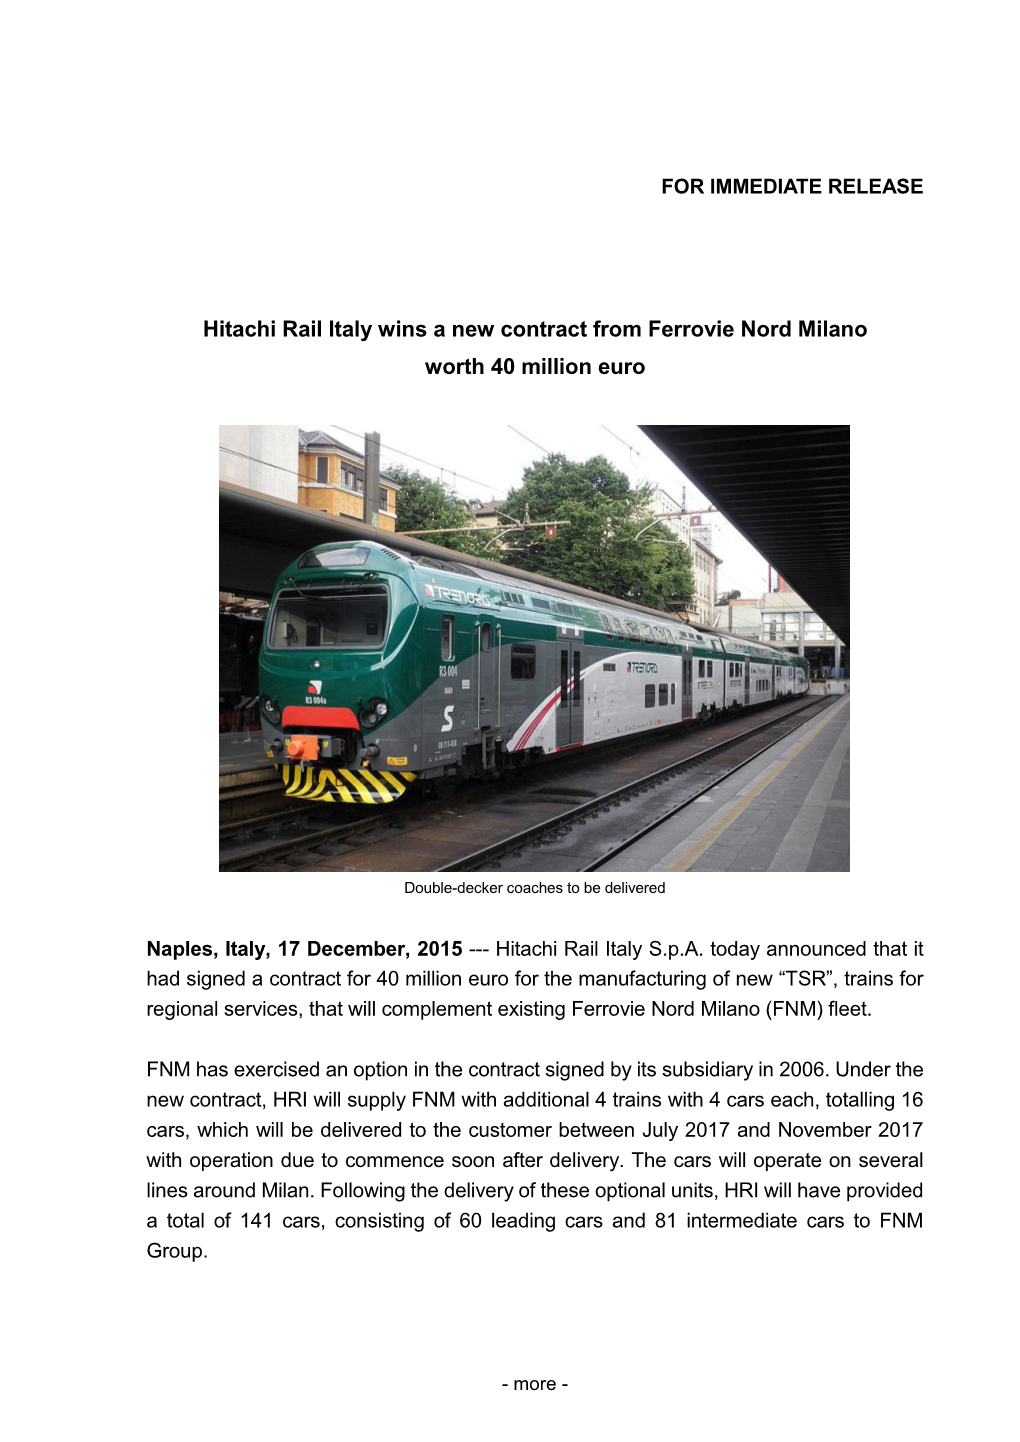 Hitachi Rail Italy Wins a New Contract from Ferrovie Nord Milano Worth 40 Million Euro